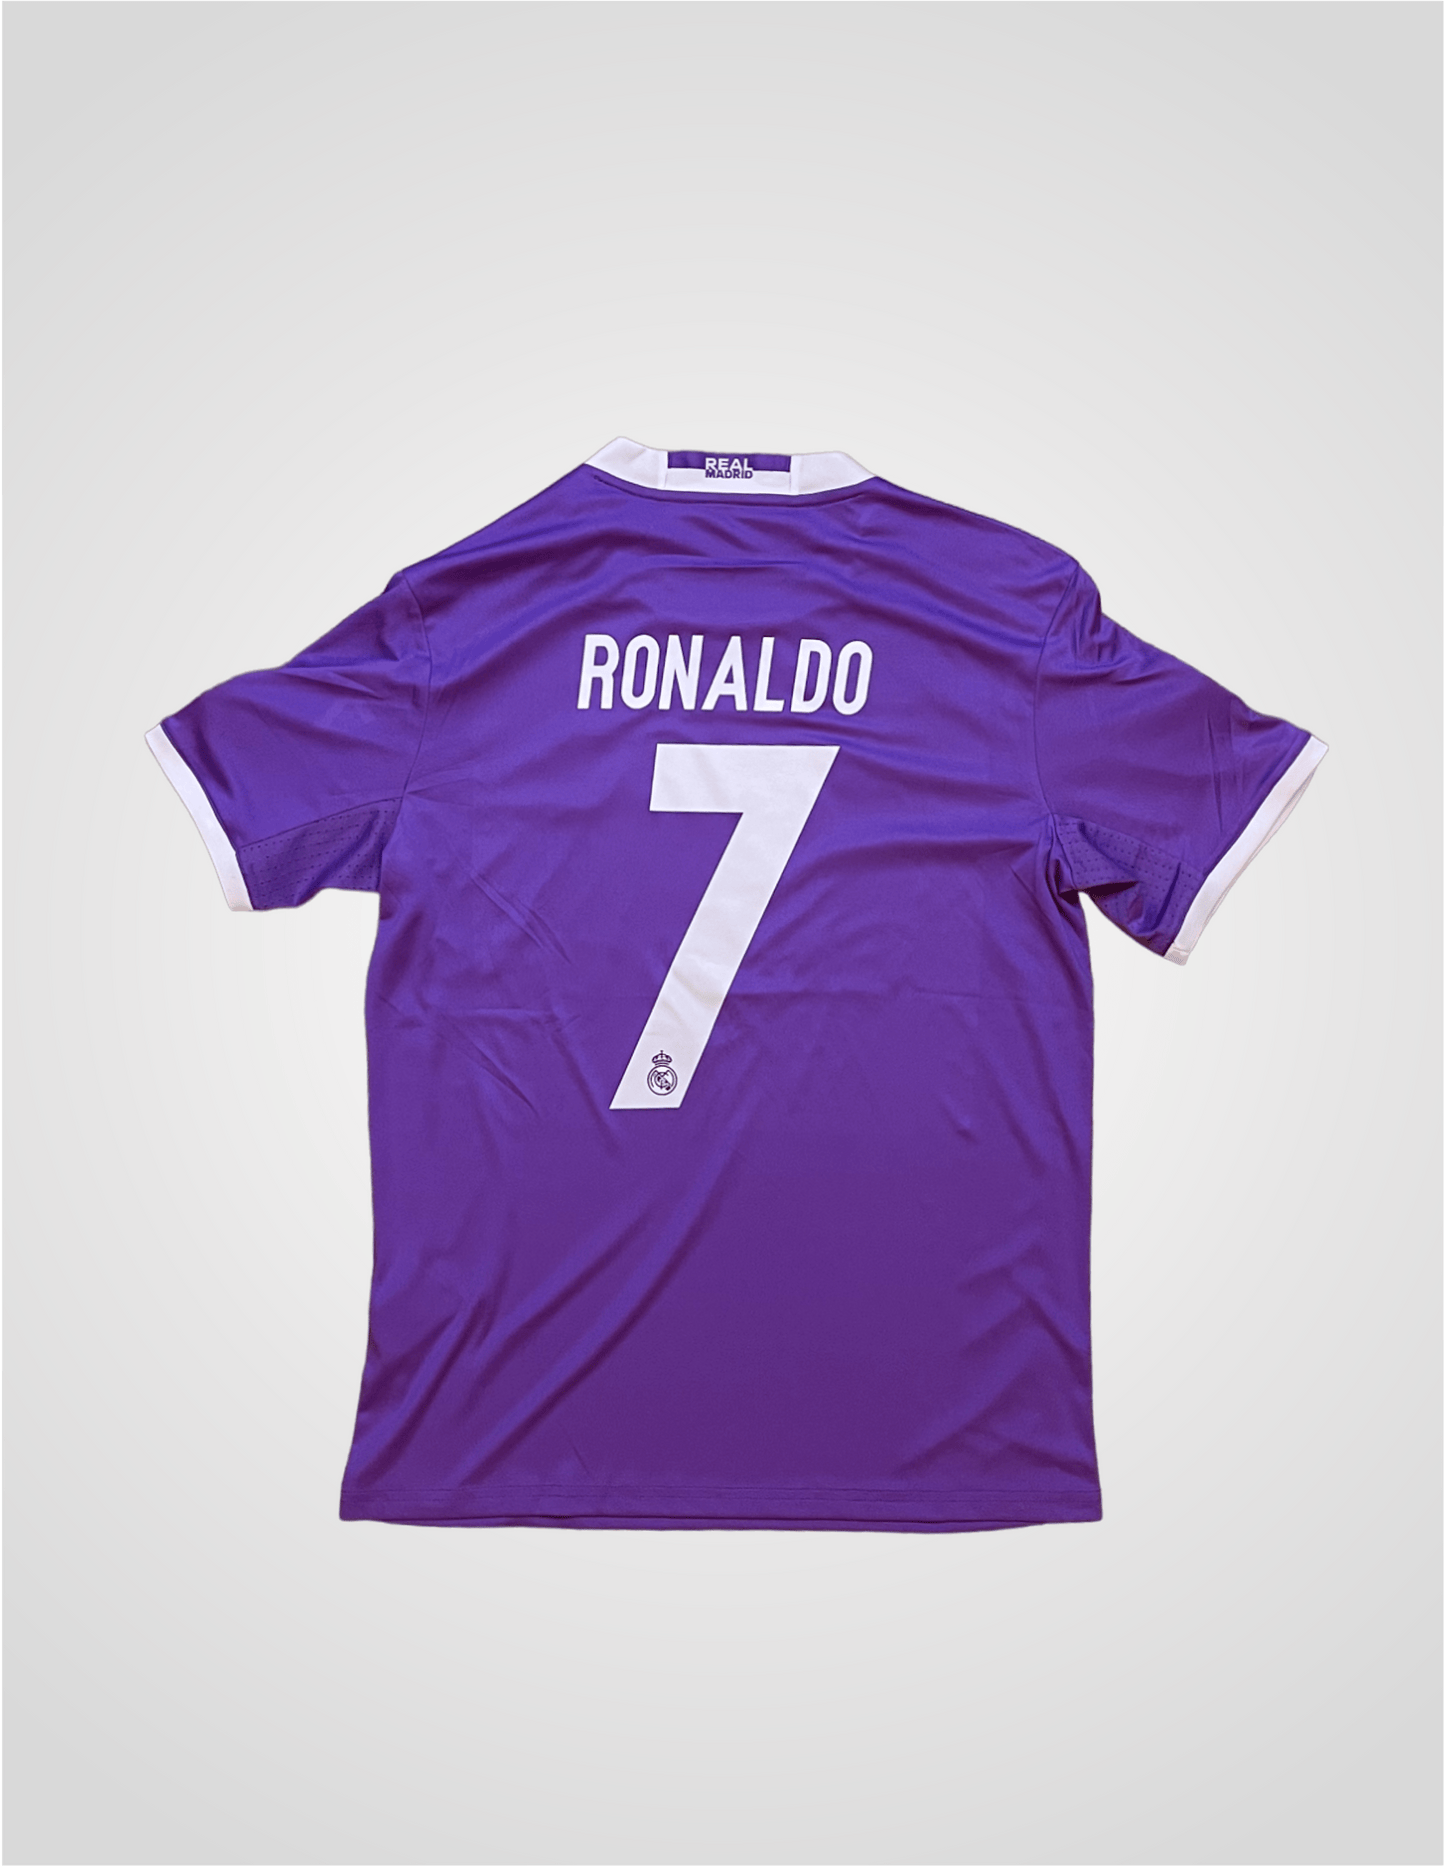 Ronaldo - Real Madrid 2016/17 - Away